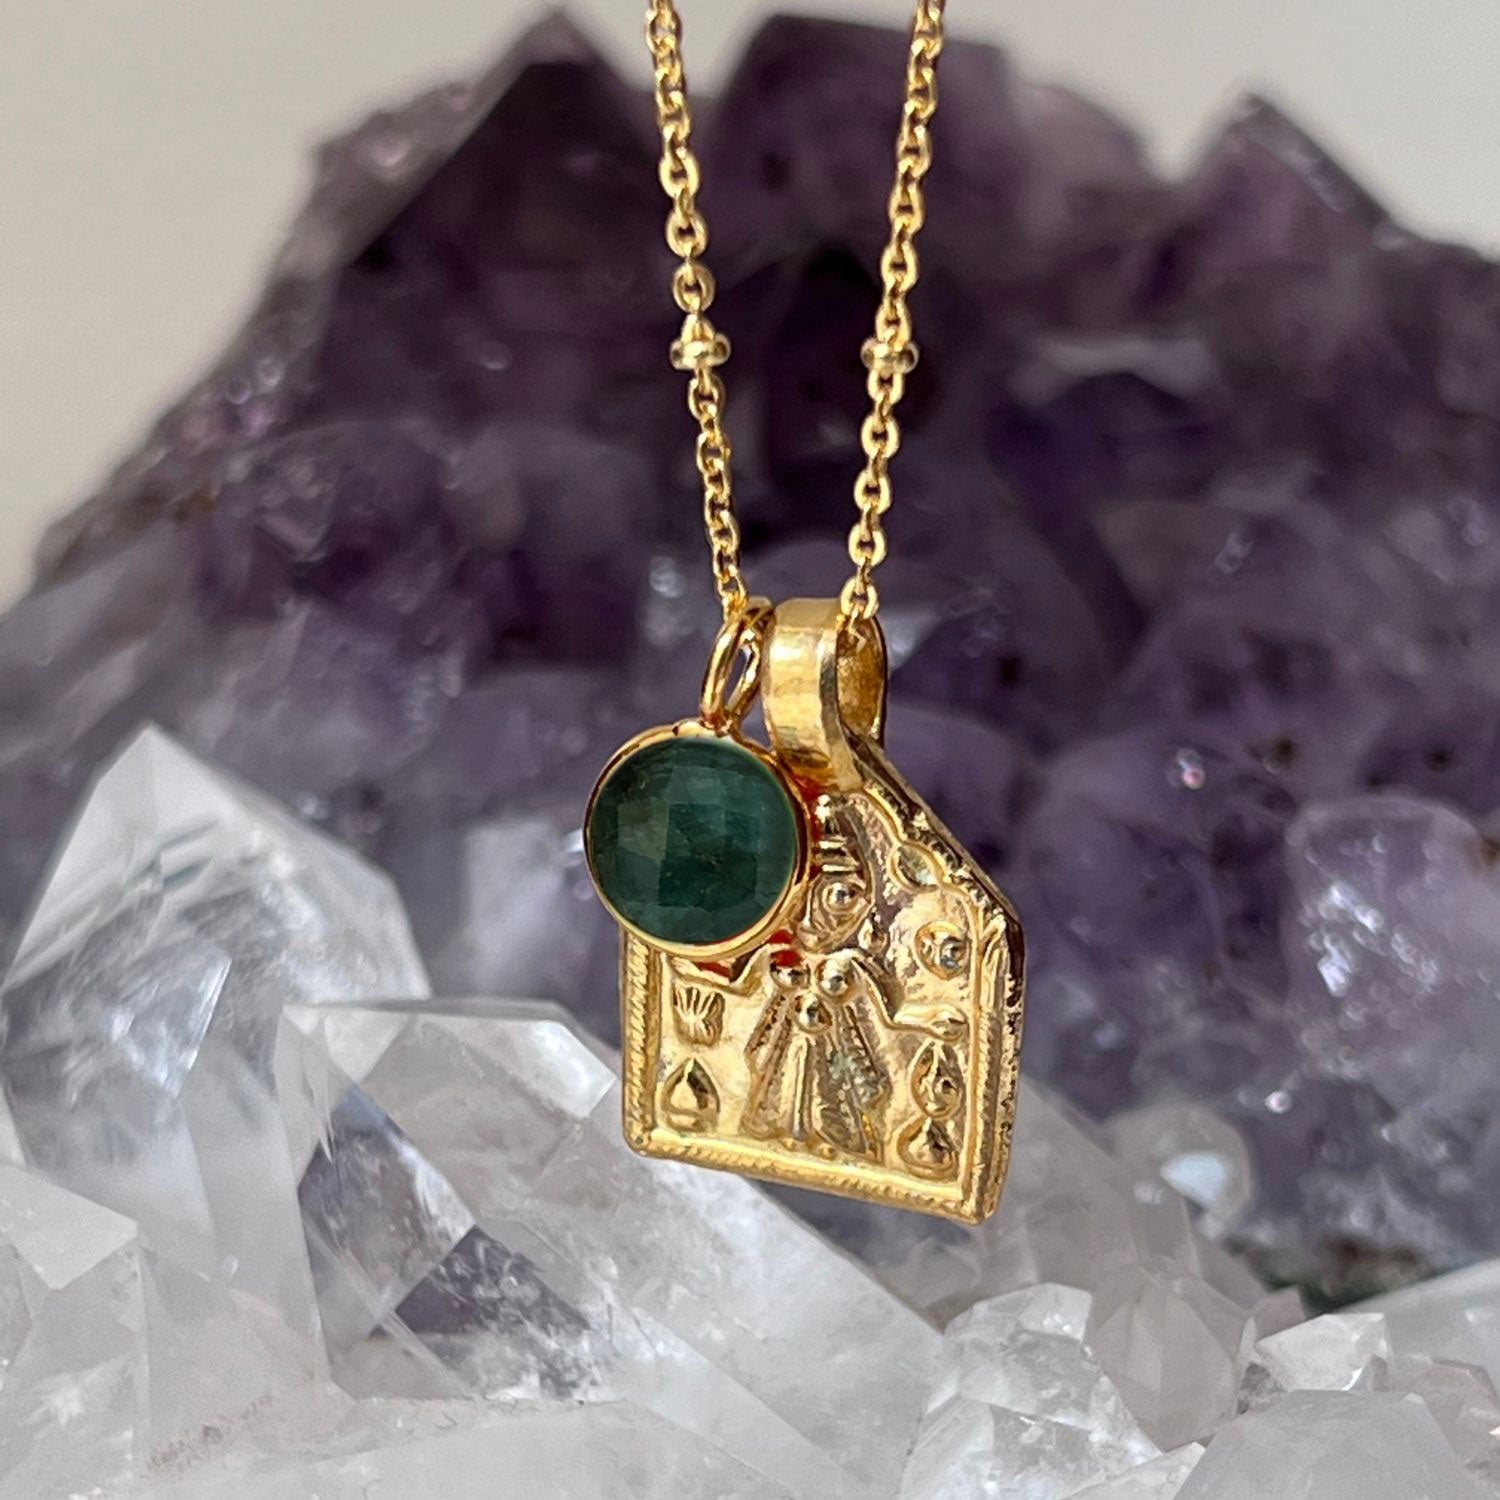 Goddess Lakshmi Pendant with Astro Emerald